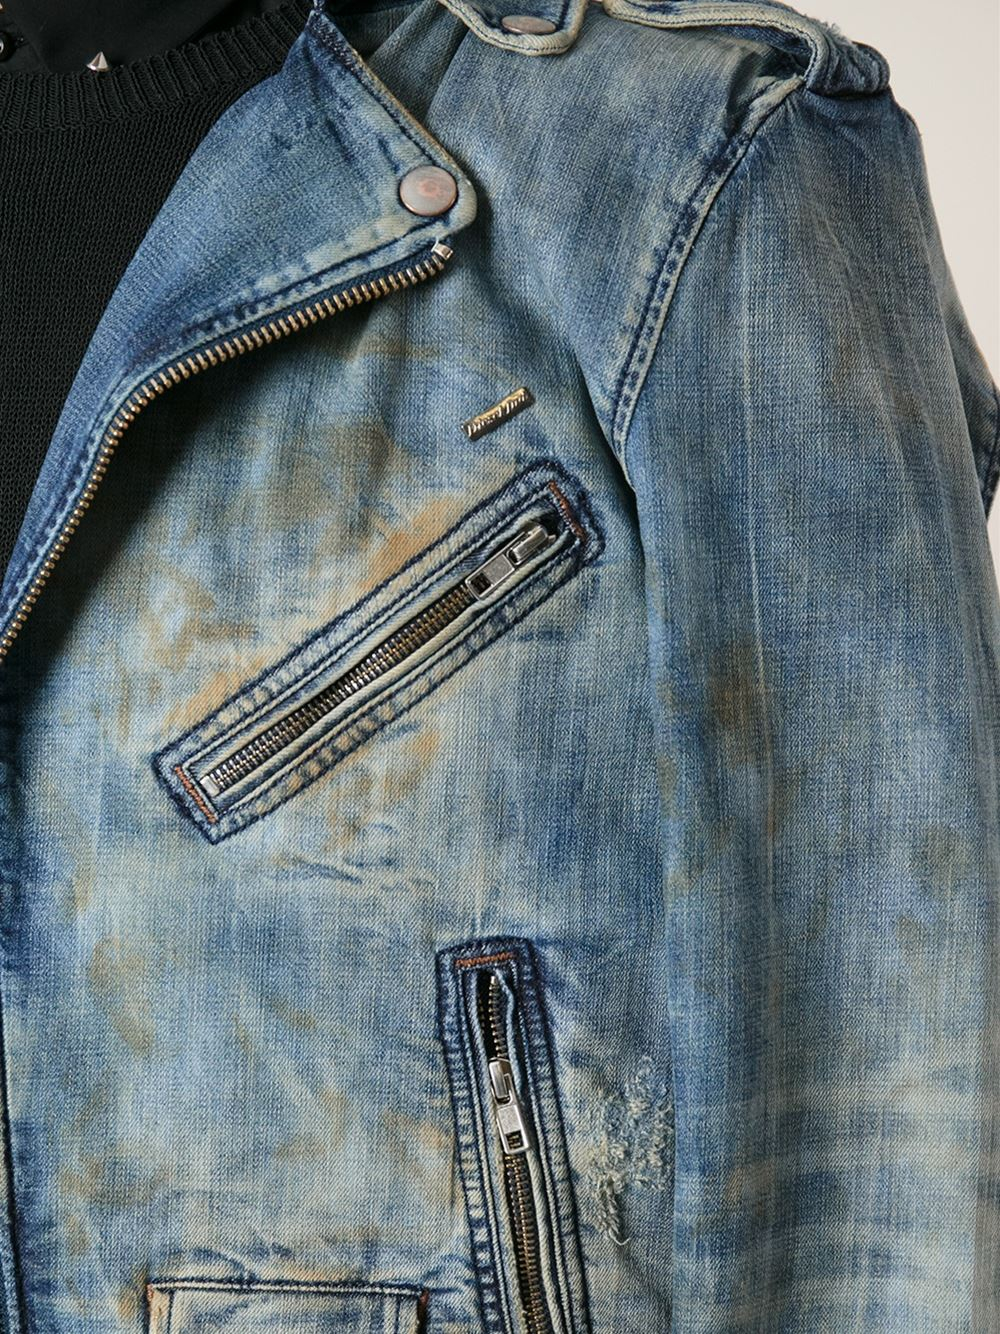 Lyst - Diesel Denim Jacket in Blue for Men